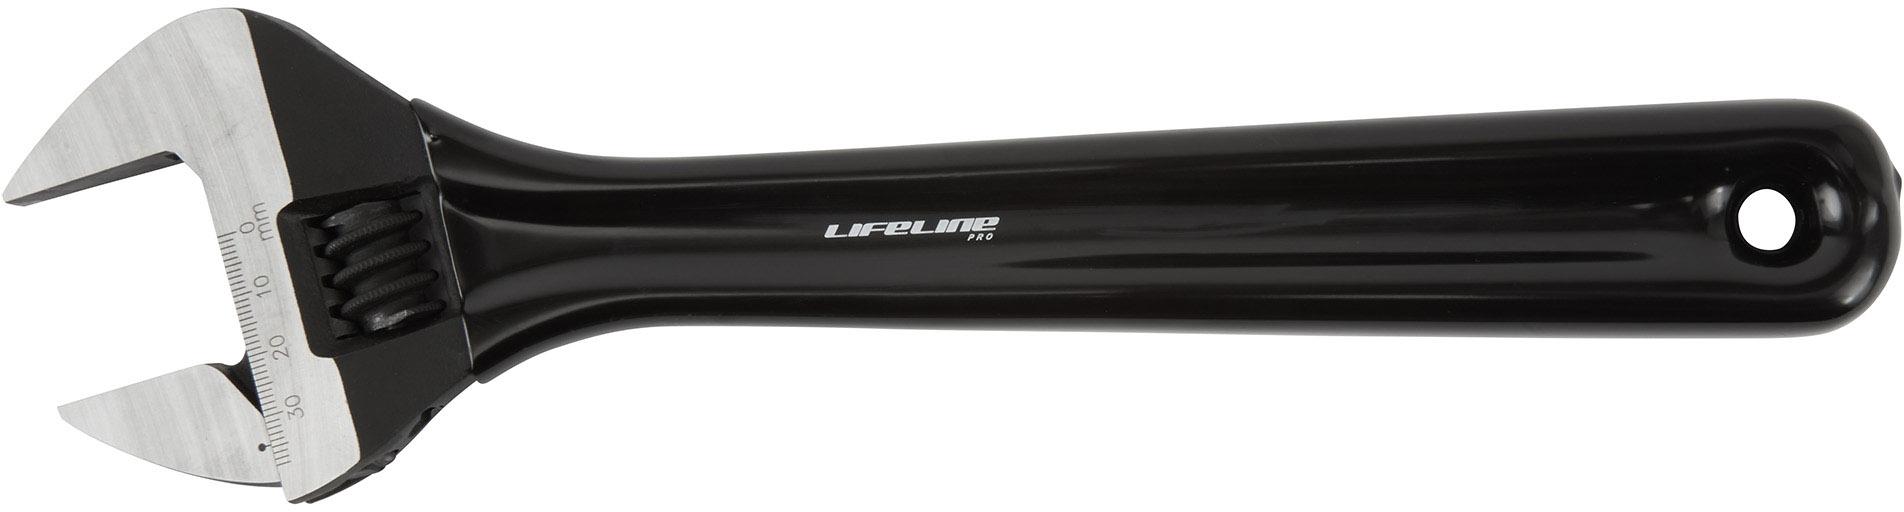 Lifeline Pro Long Adjustable Wrench (12)  Black